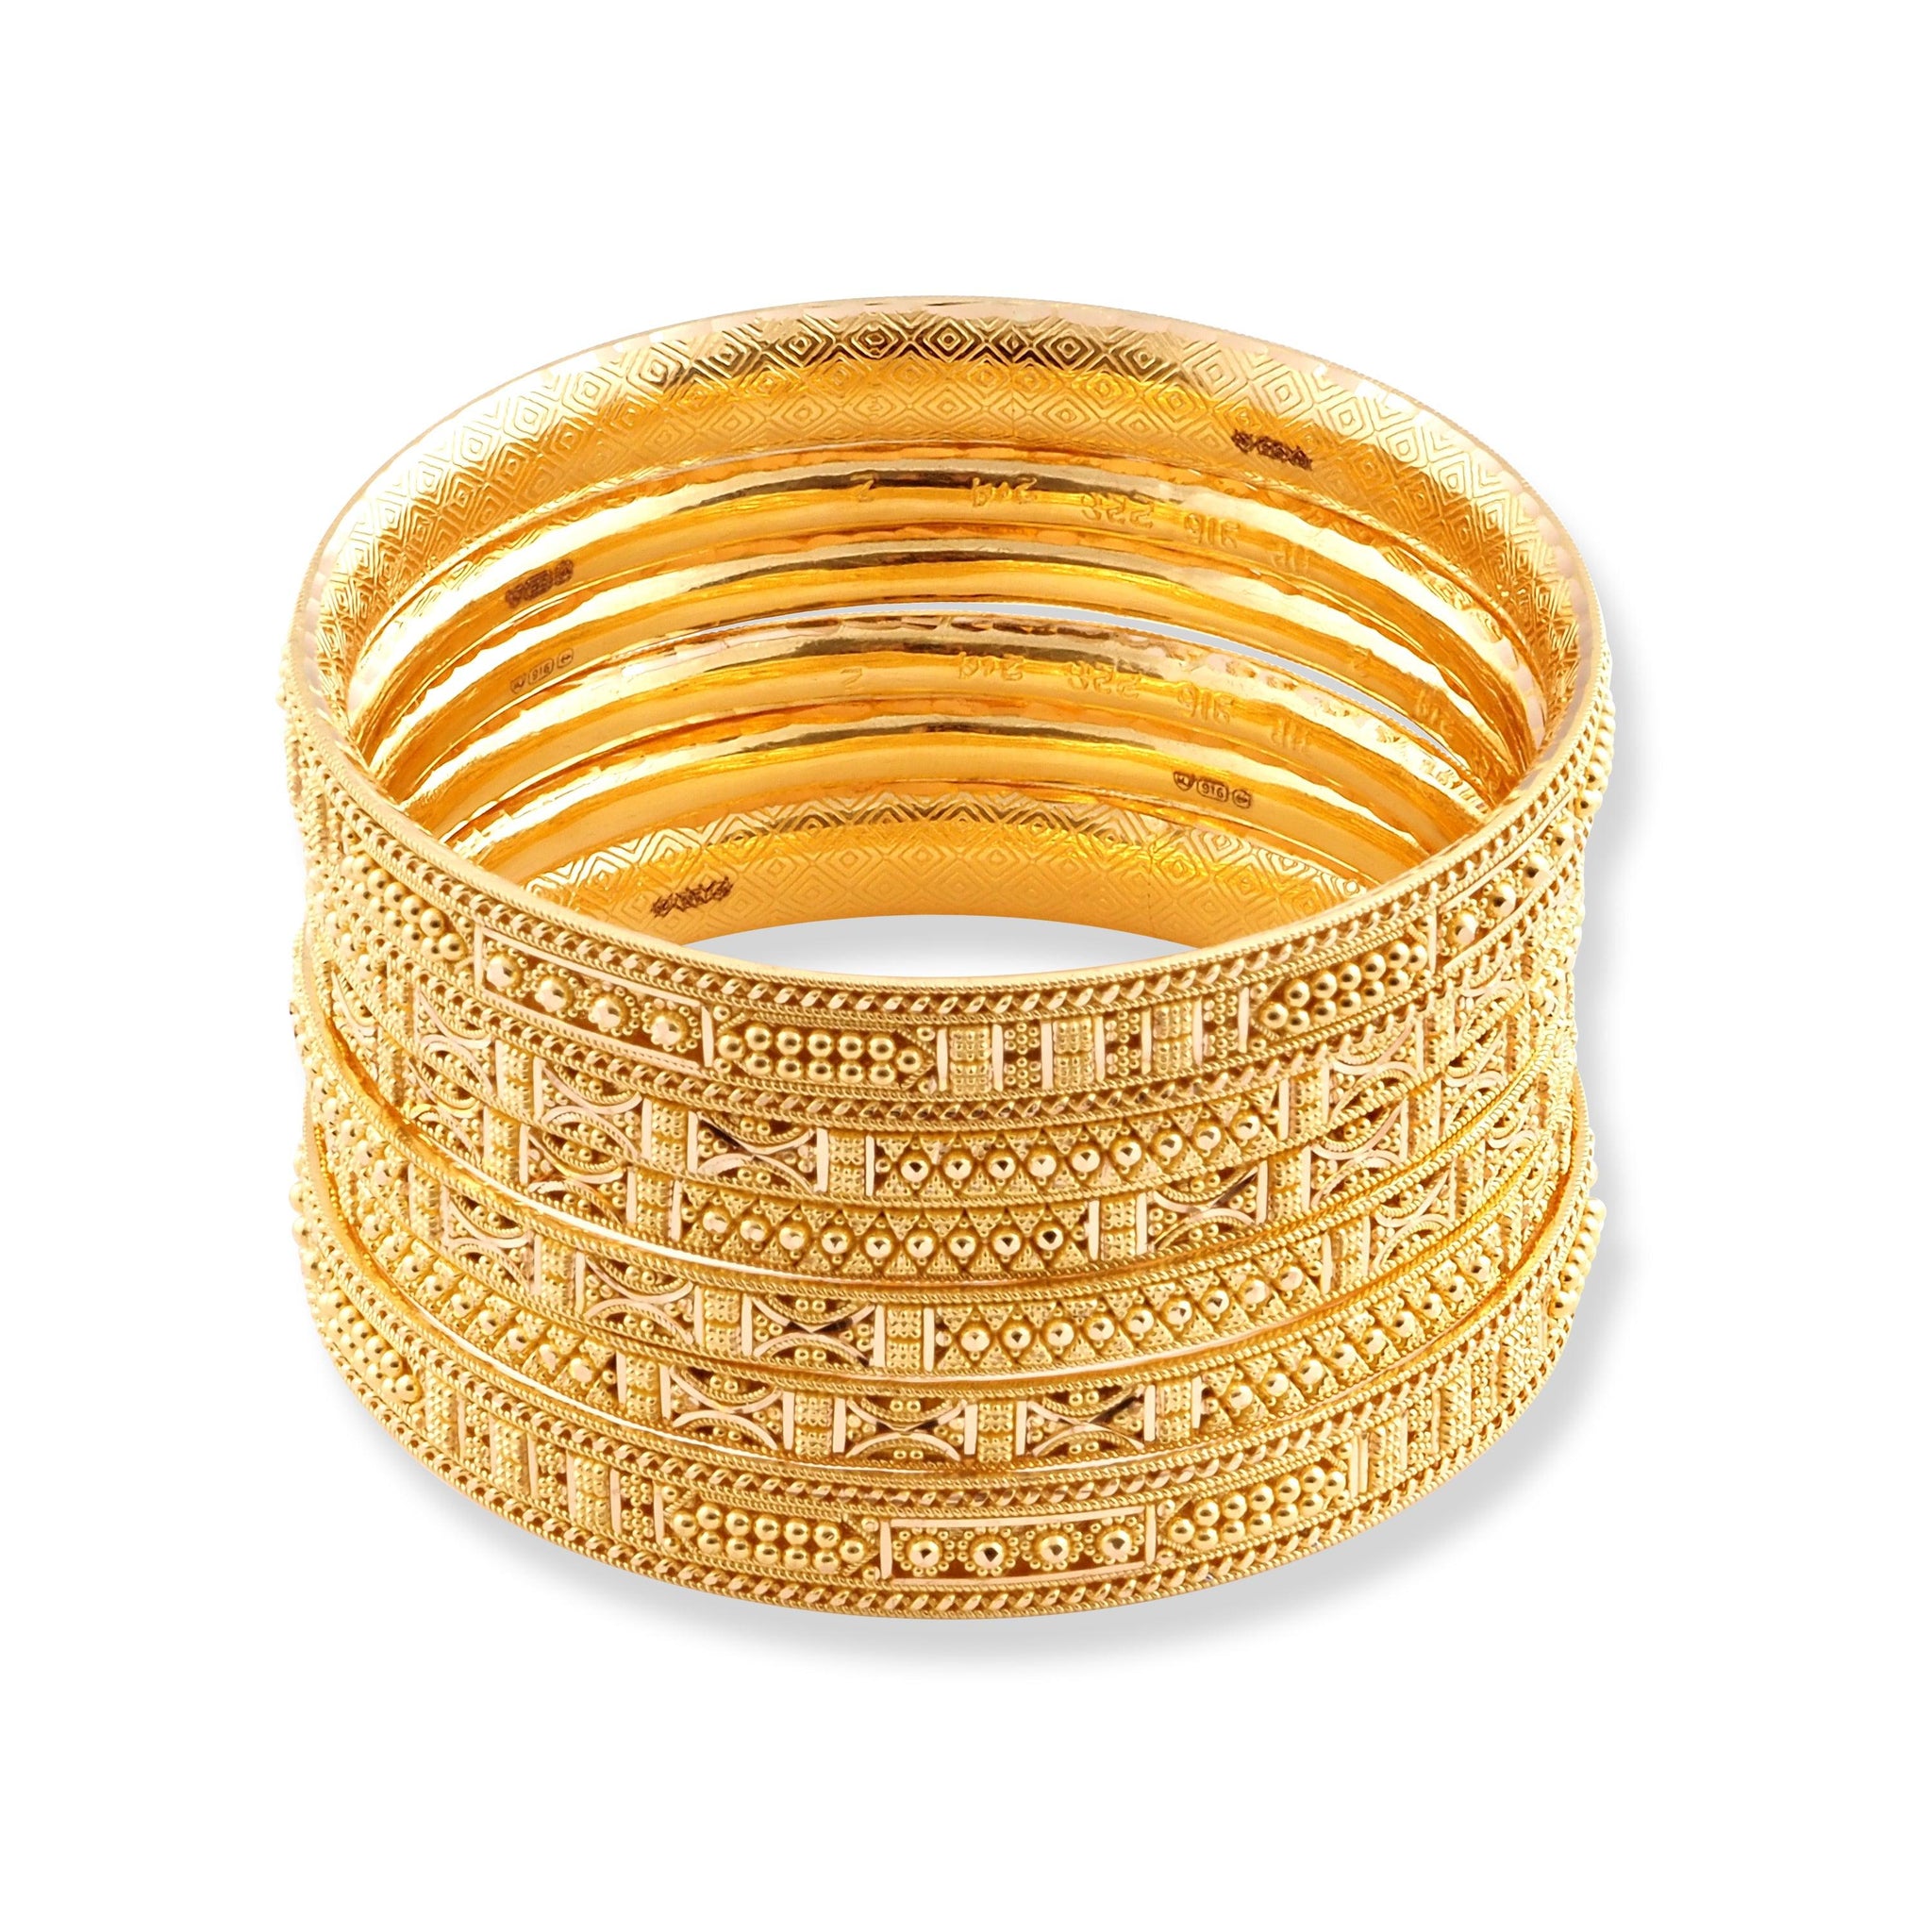 Set of Six 22ct Gold Bangles with Diamond Cut Design and Filigree Work B-8573